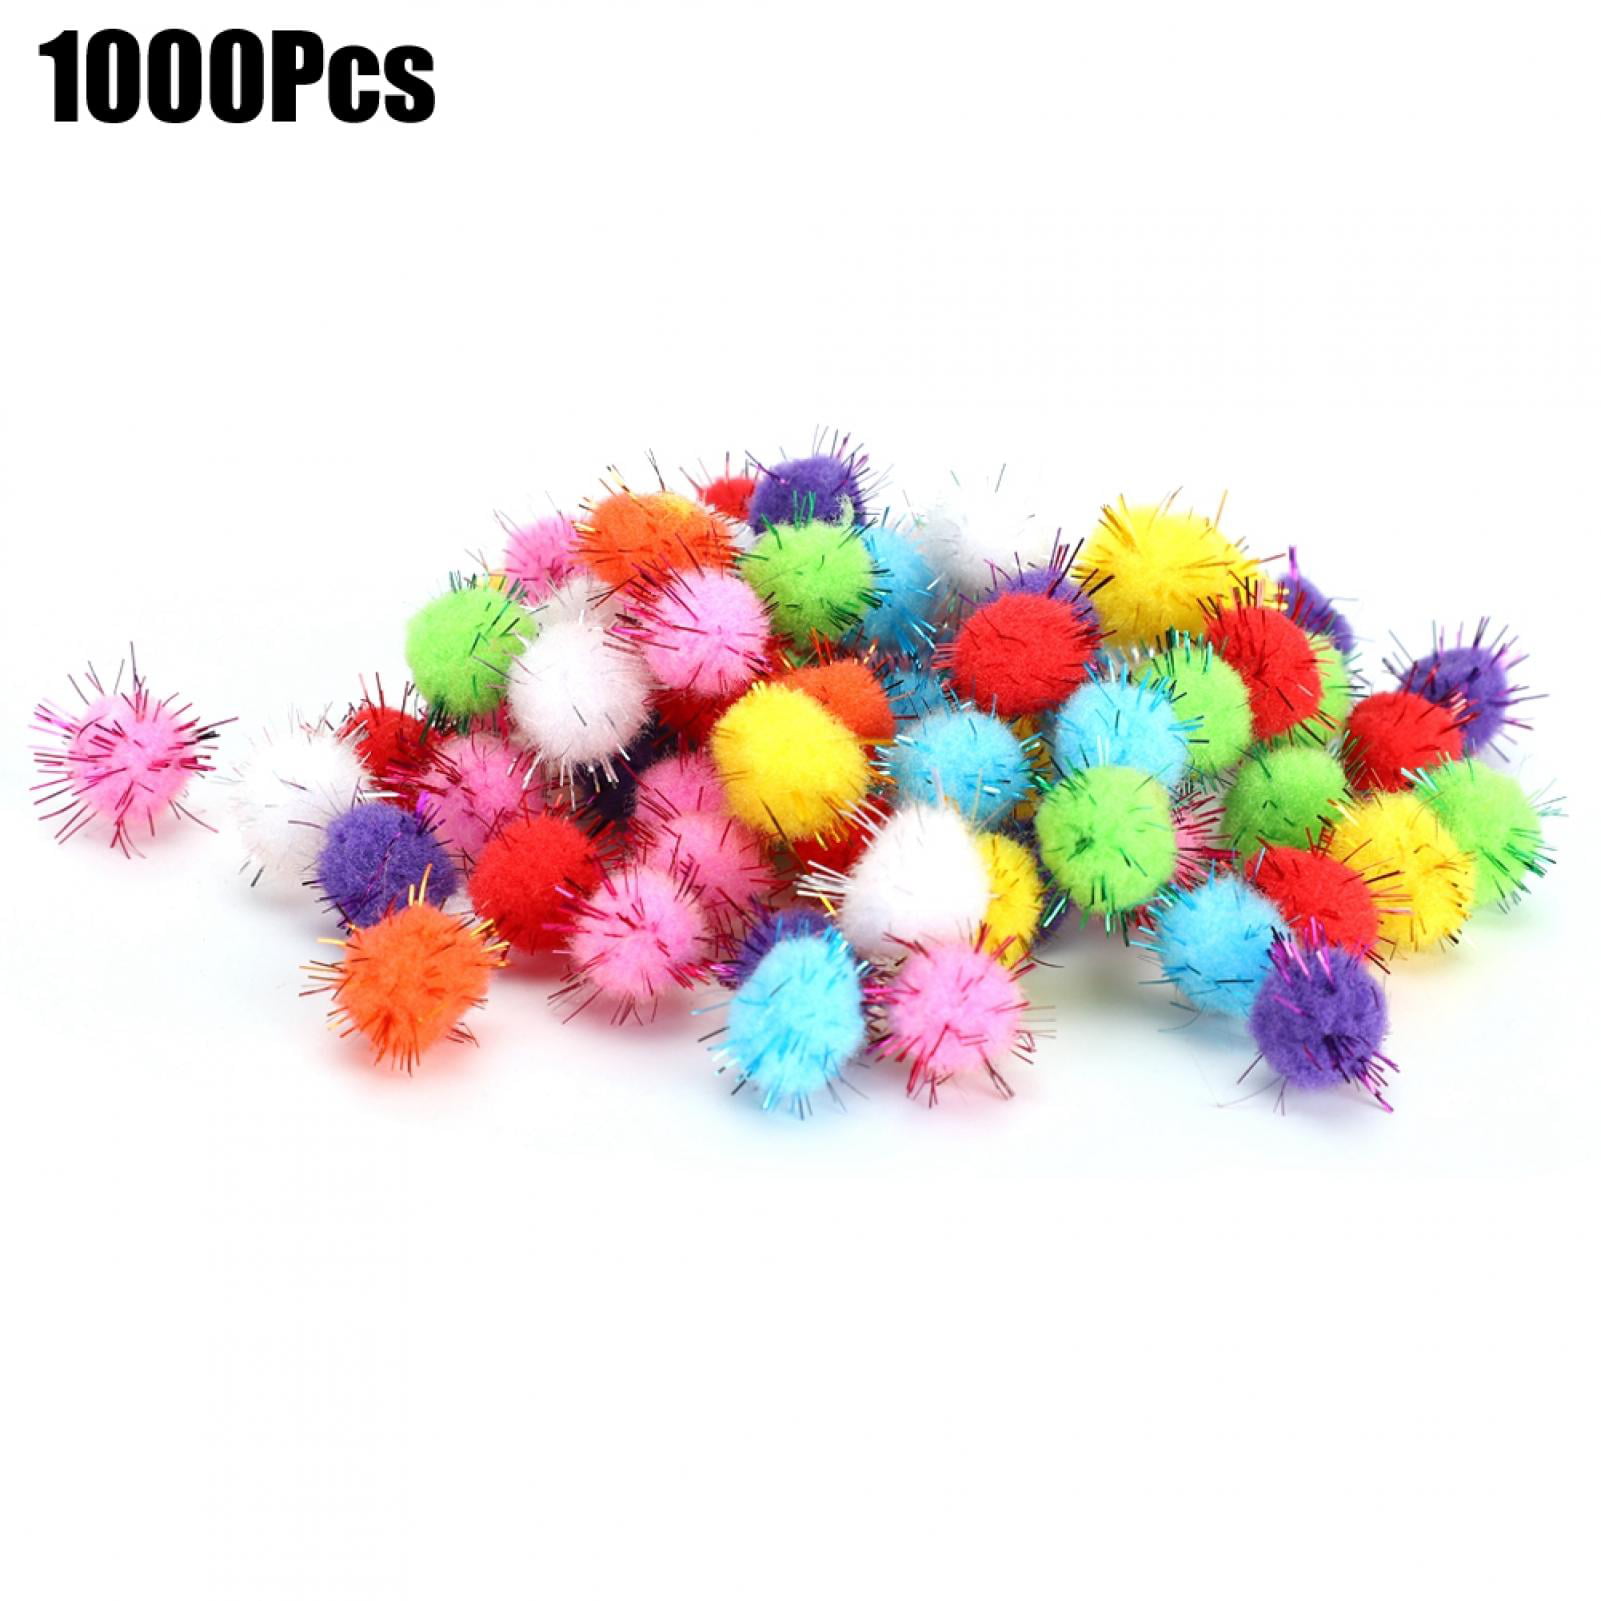 100Pcs 15mm Poms Mixed Color Kids Toys Balls Pompoms DIY Crafts Decor Hot 